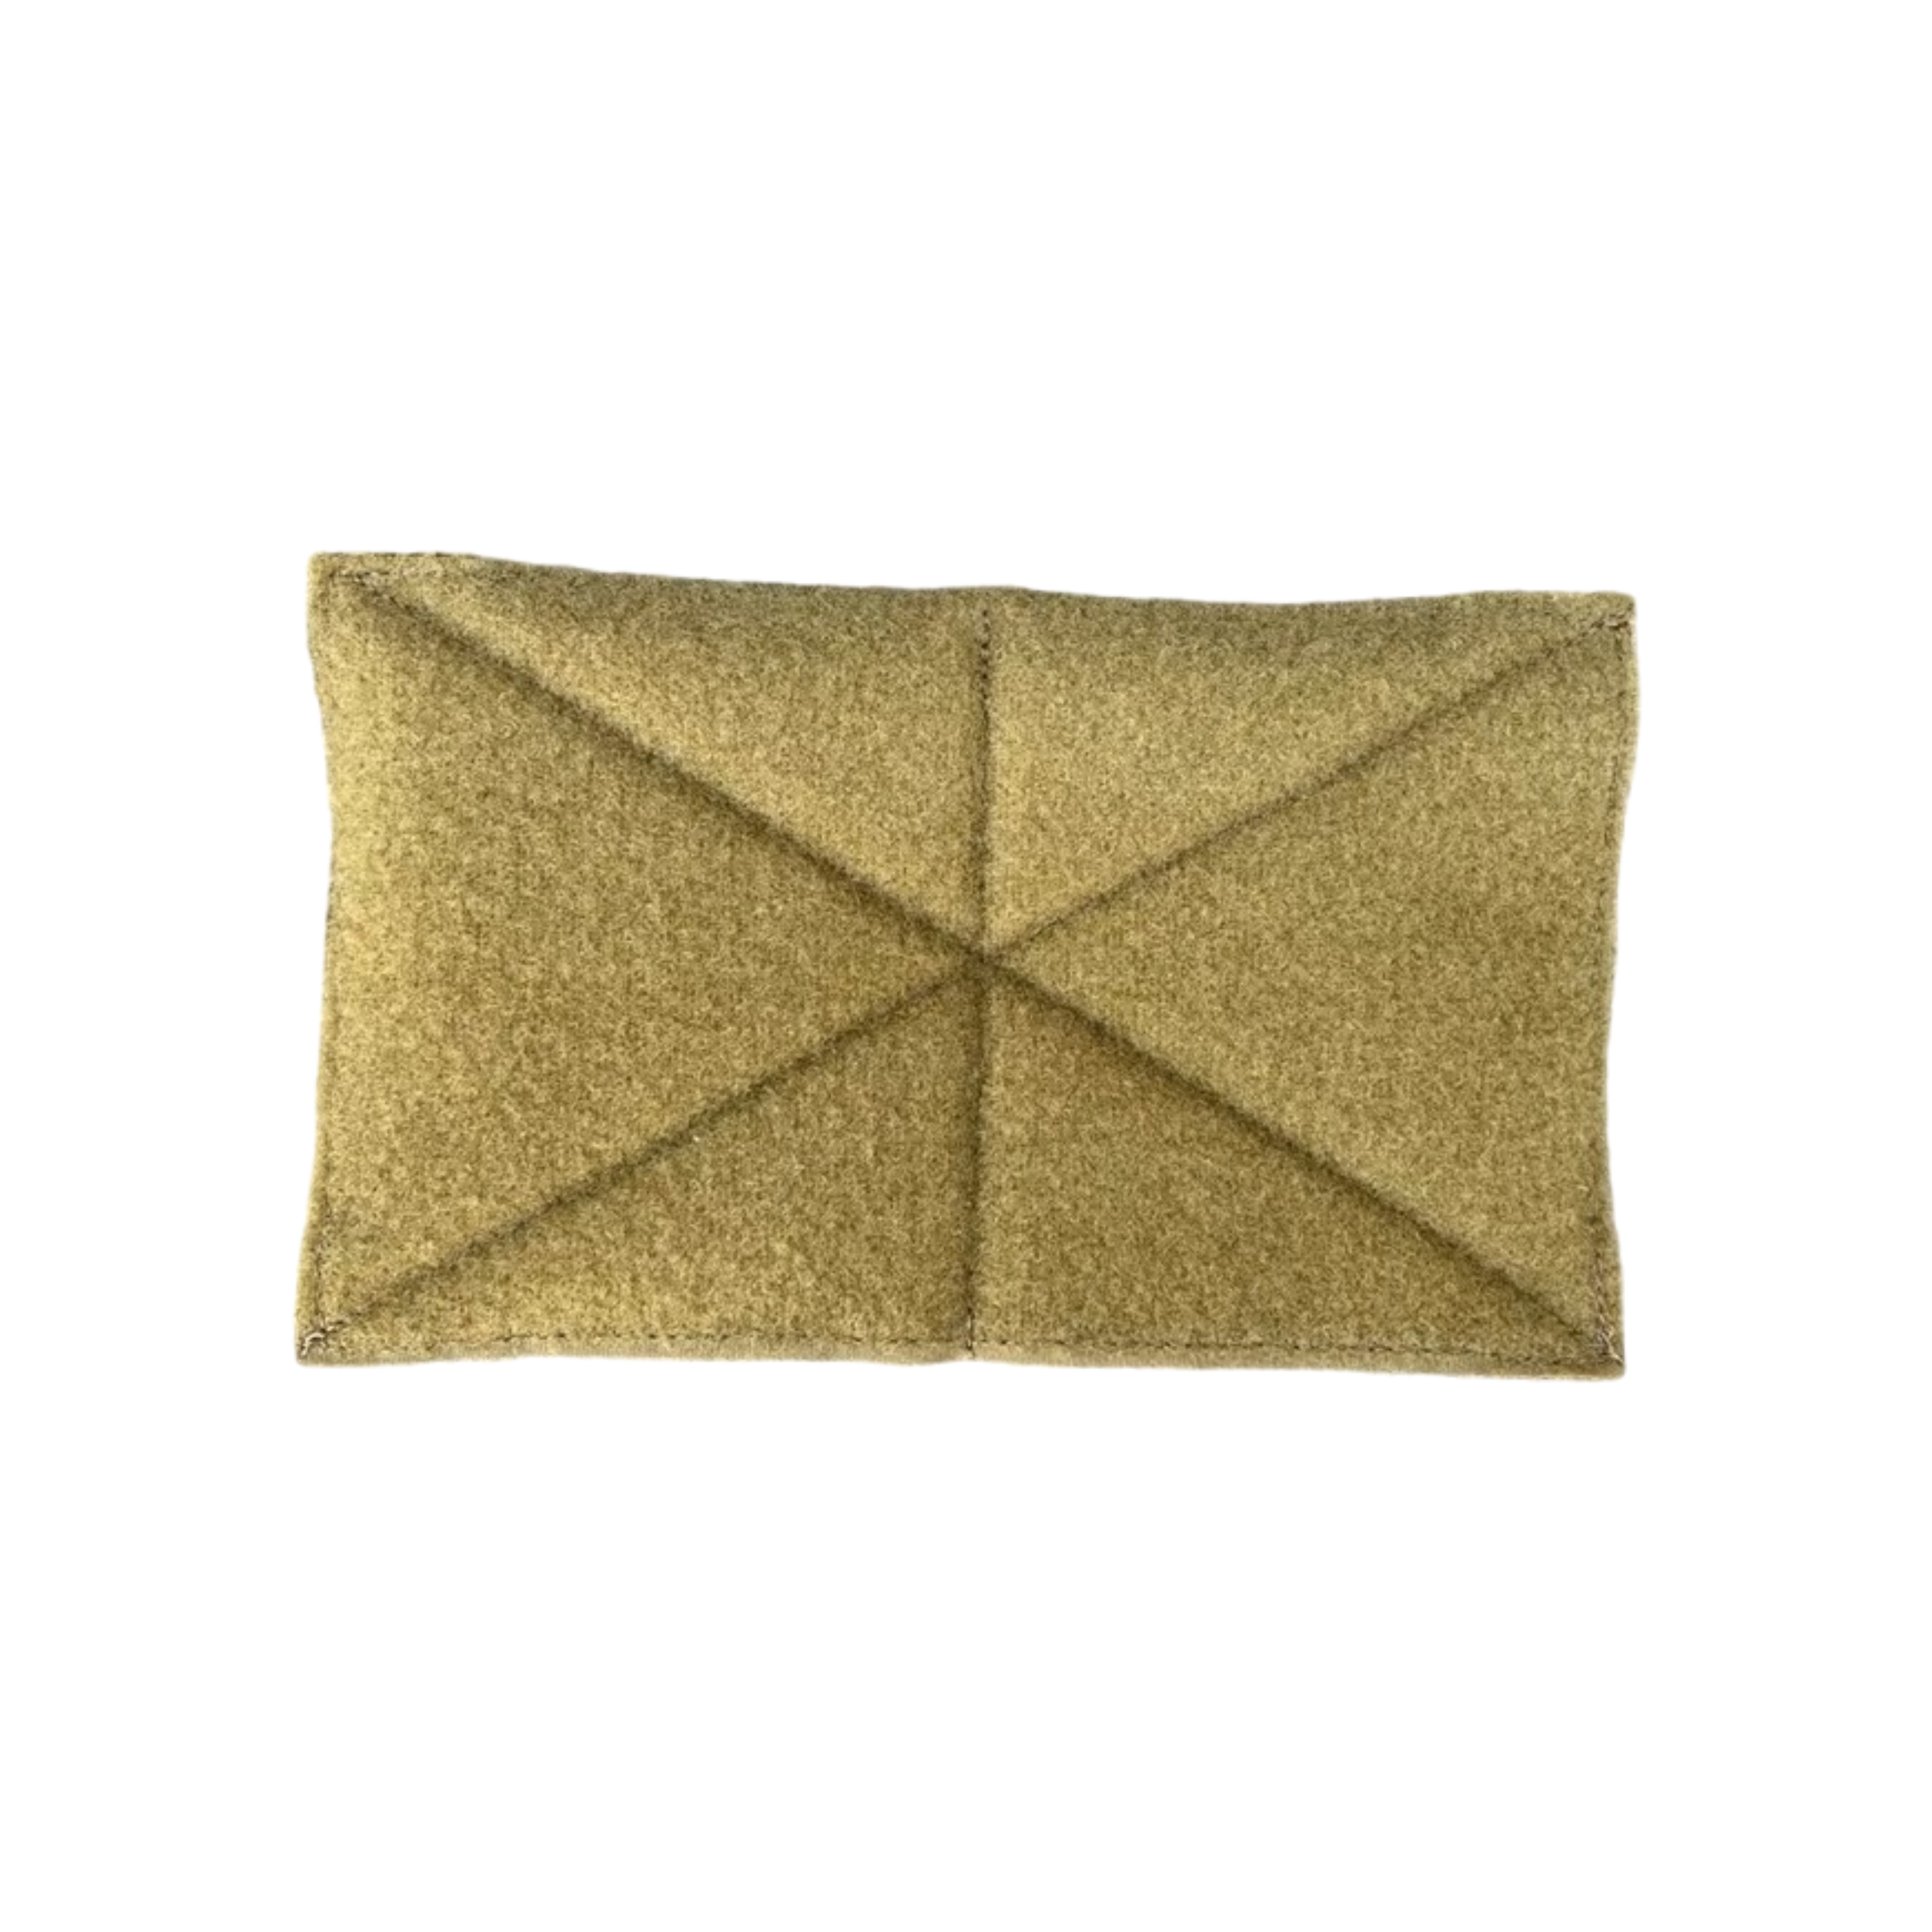 Chest Rig Sandwich Comfort Base Pad